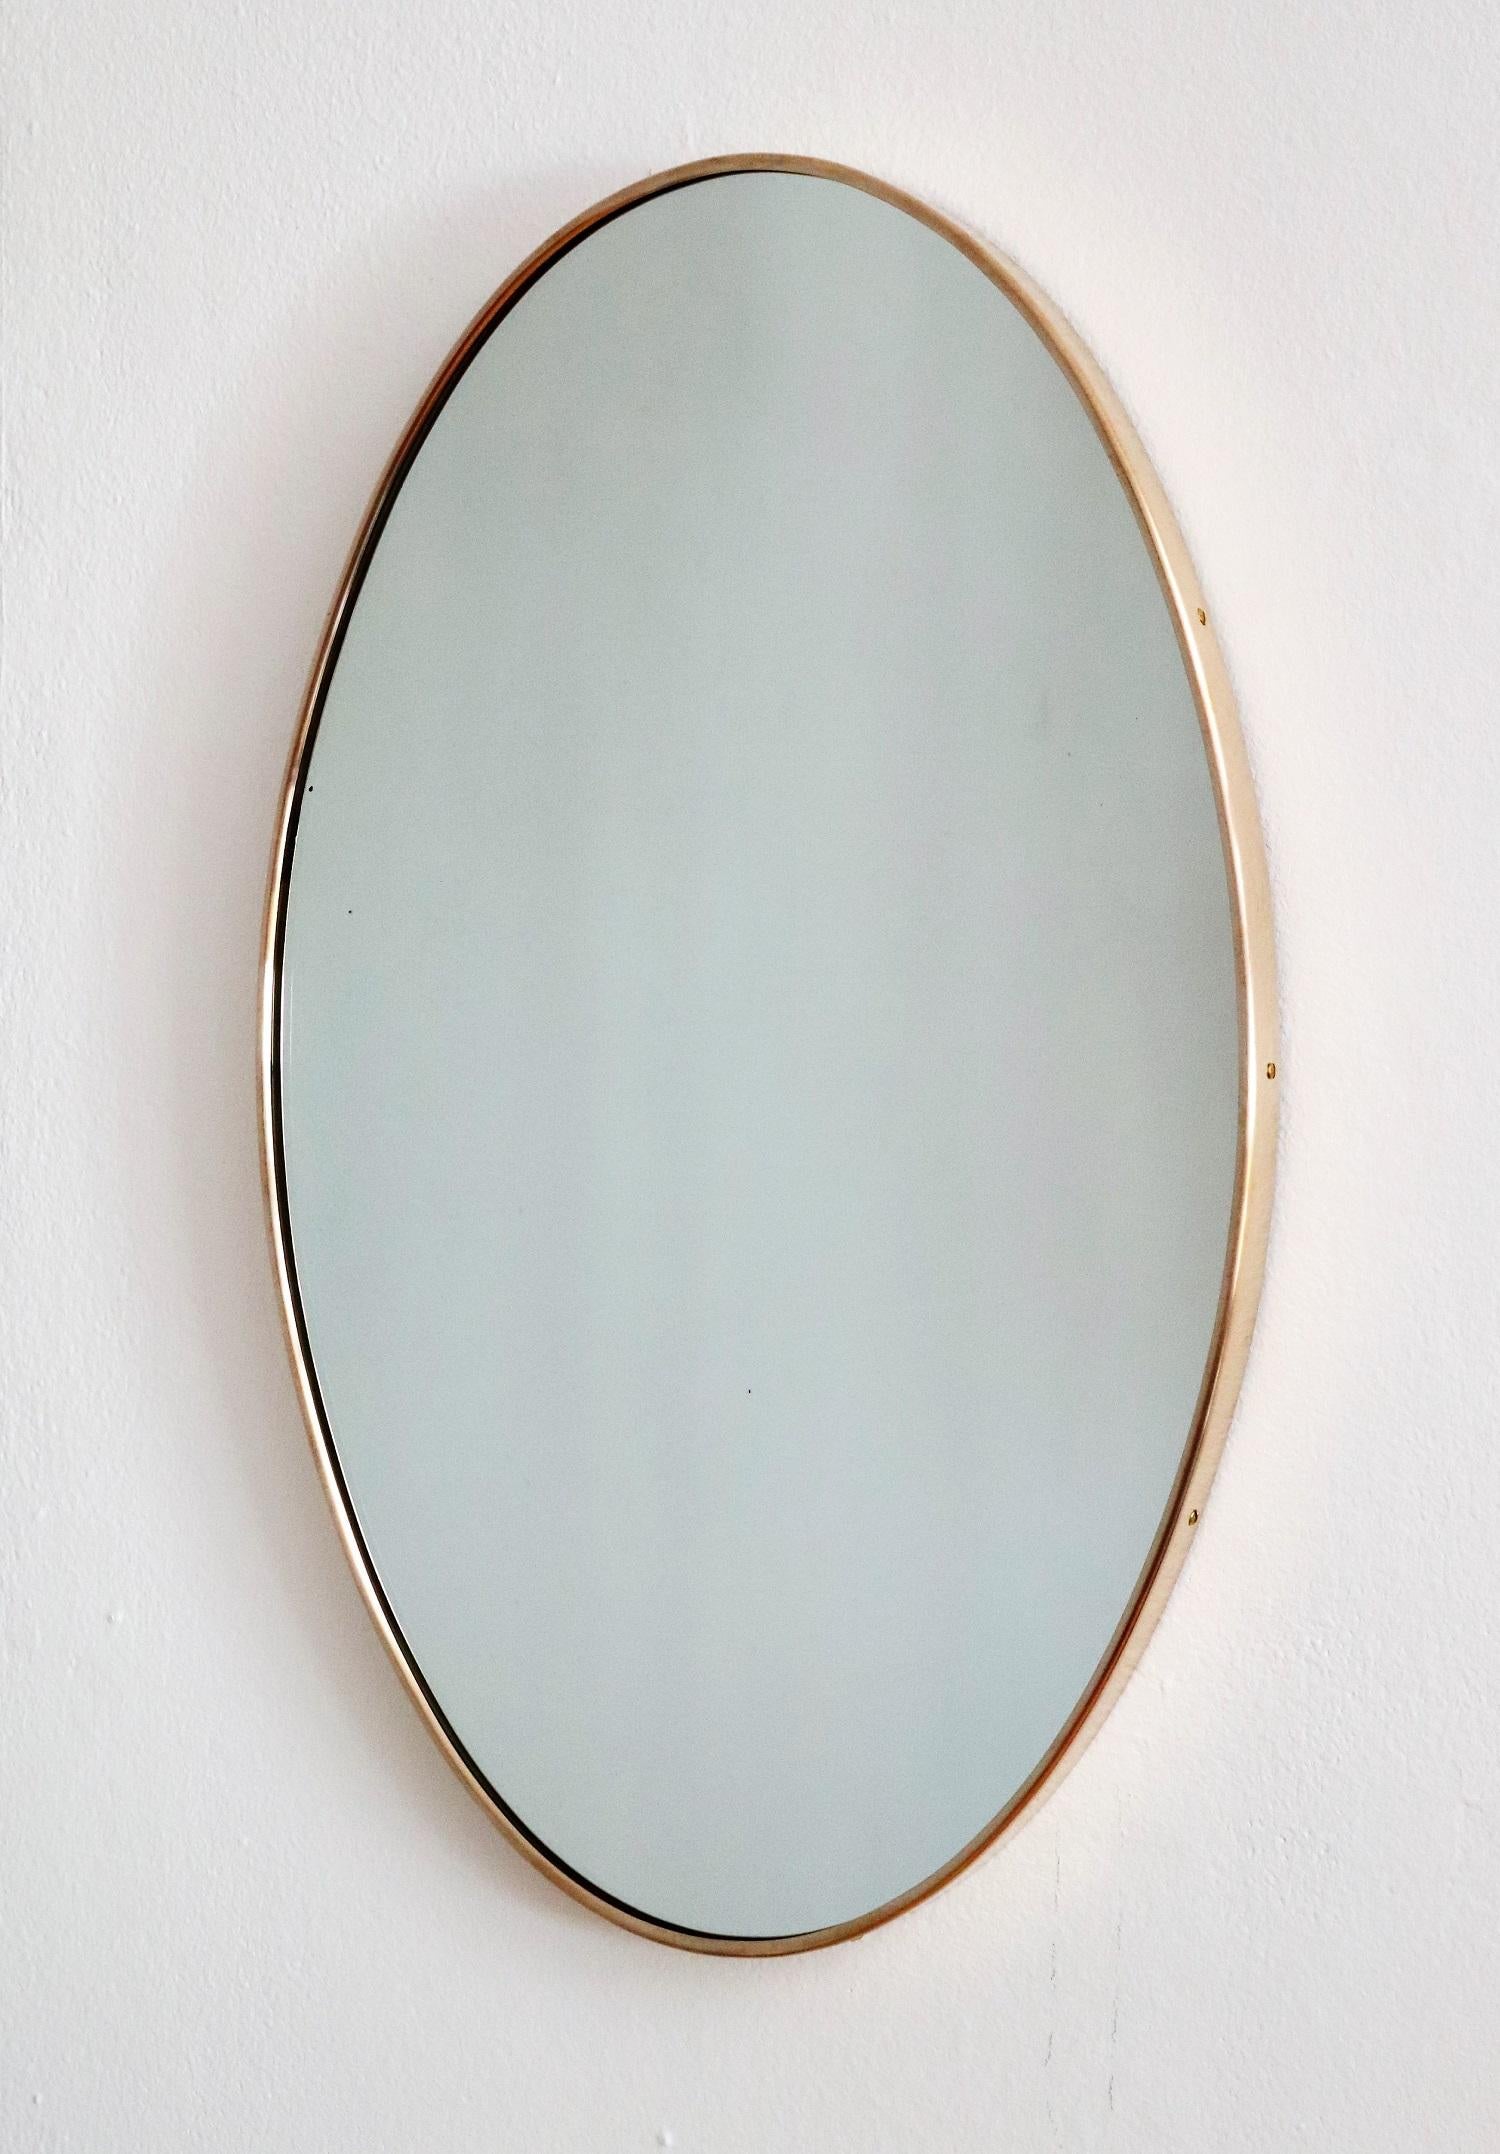 Late 20th Century Italian Regency Wall Mirror with Brass Frame, 1970s